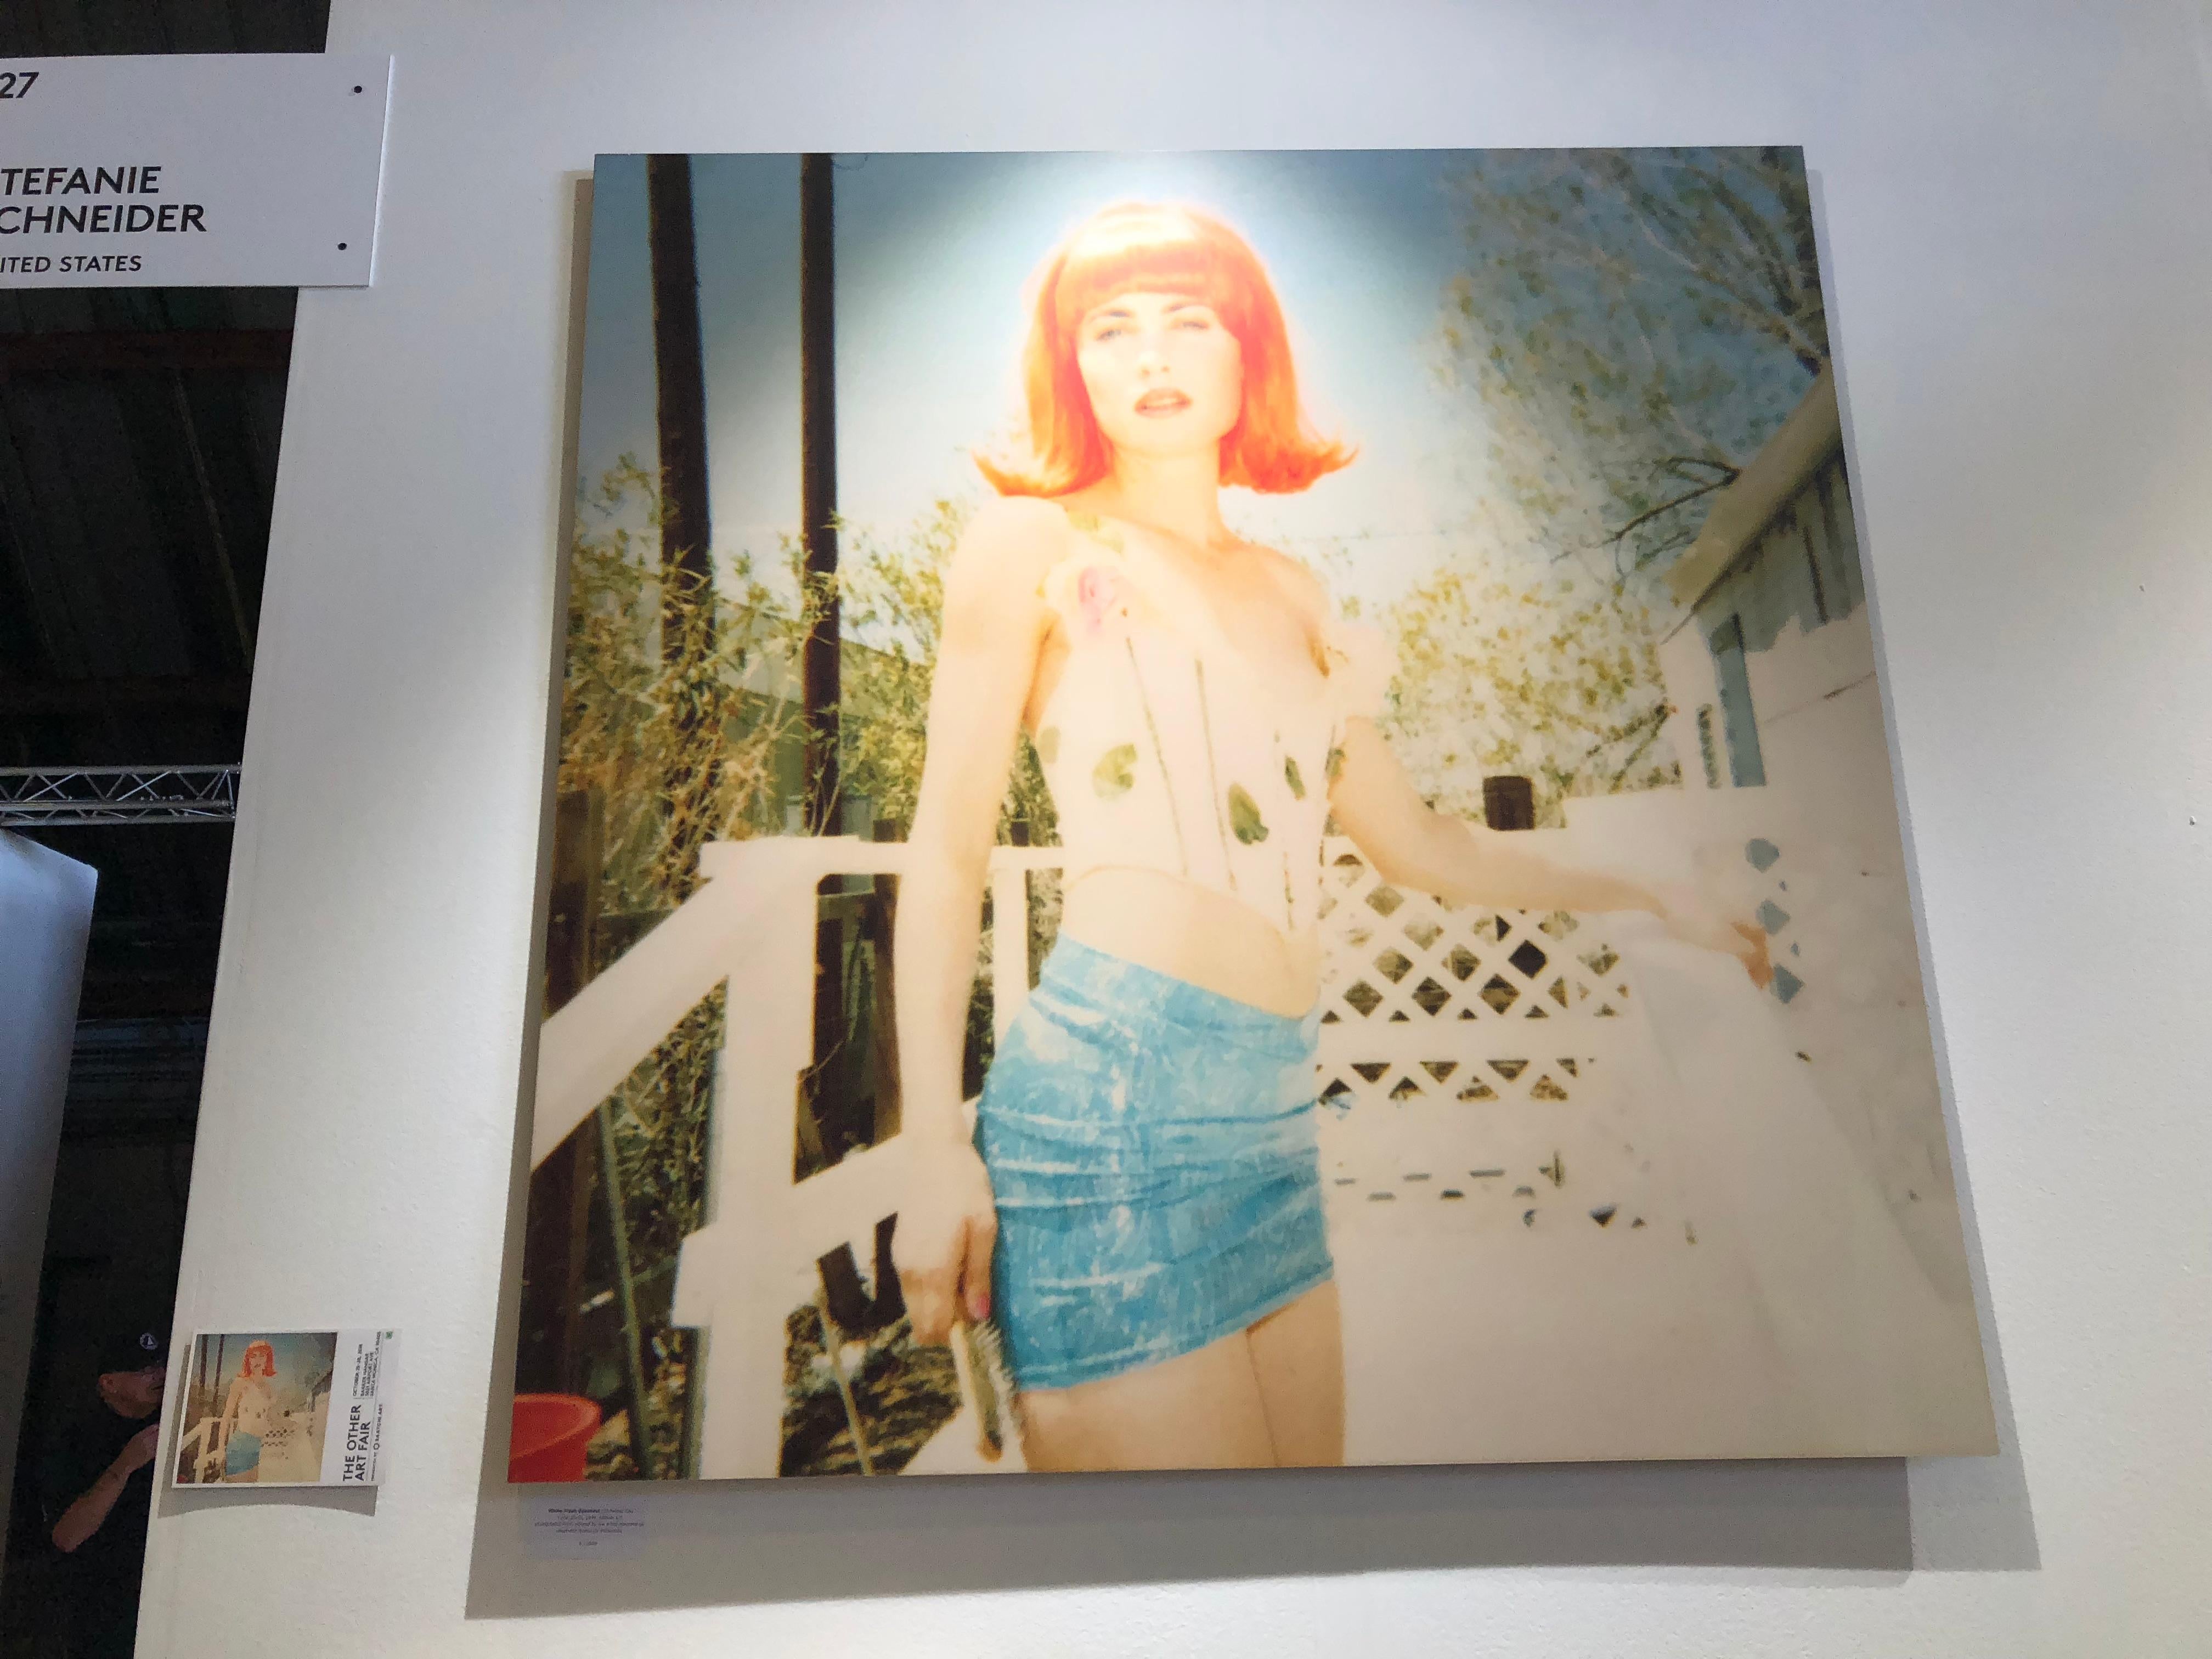 White Trash Beautiful I (29 Palms, CA) featuring Radha Mitchell, analog, mounted - Photograph by Stefanie Schneider